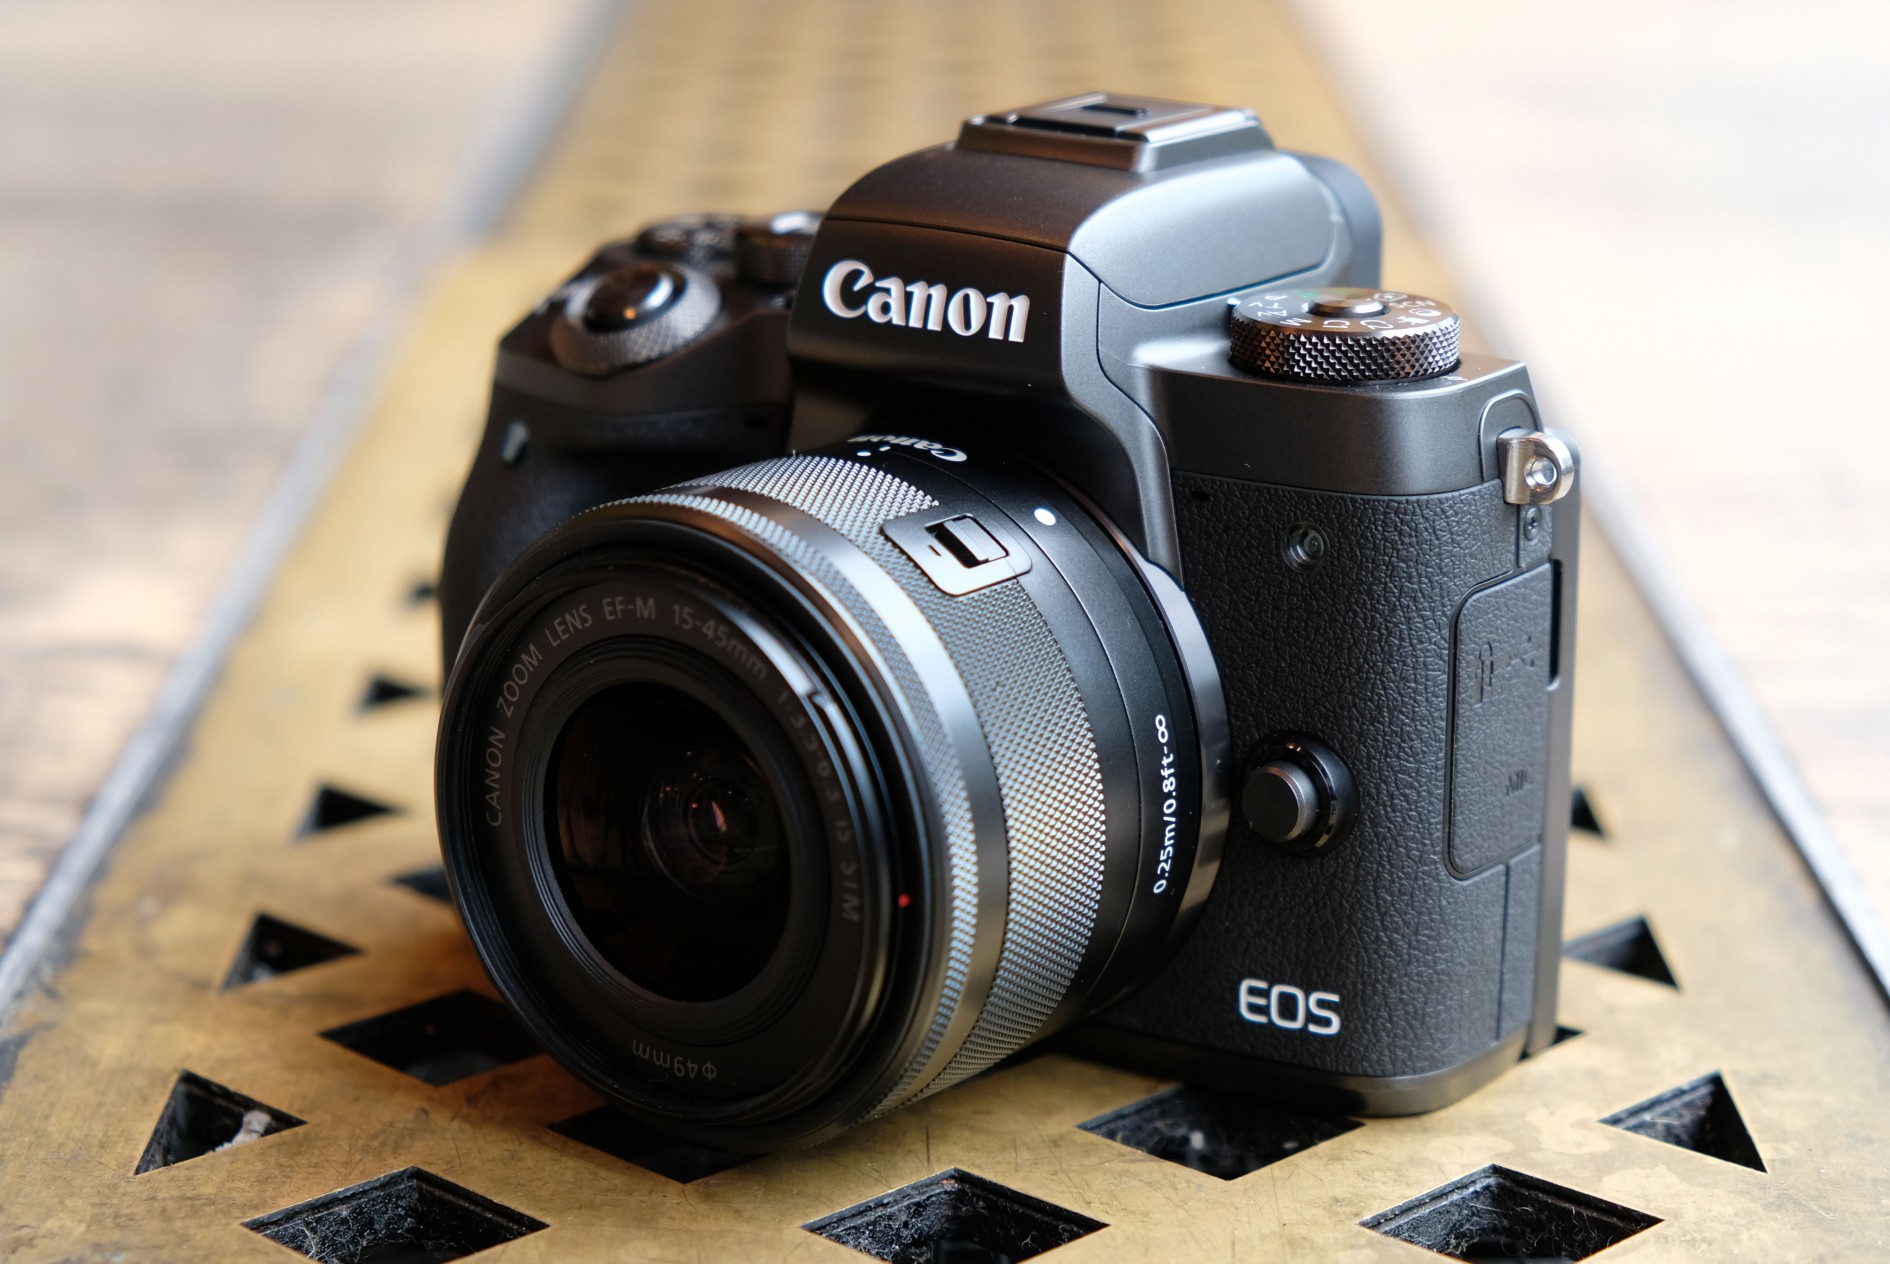 Canon EOS M50 Microless Camera Has 24.1-Megapixel Sensor